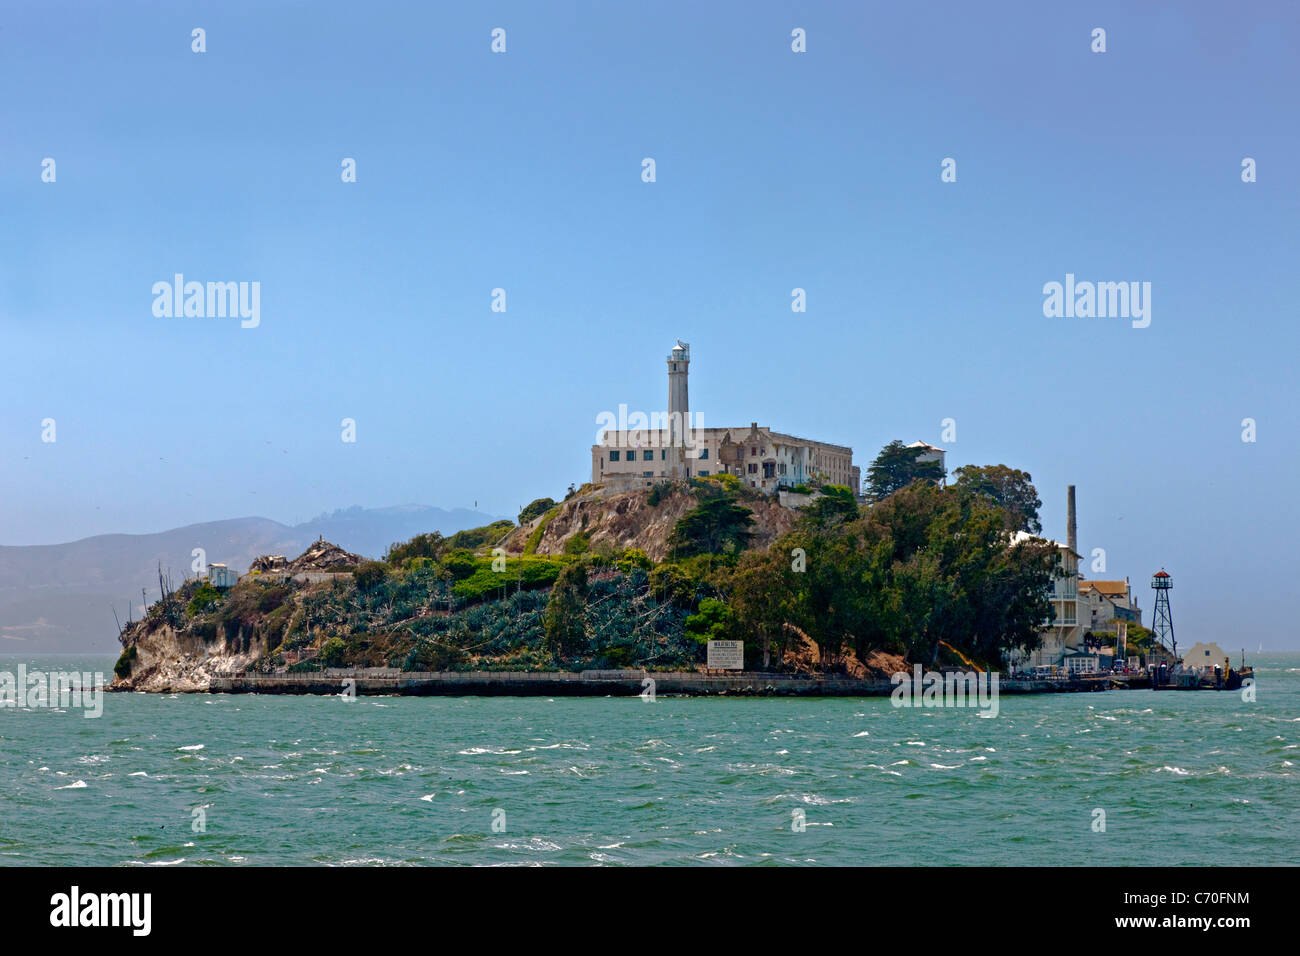 Alcatraz Insel von San Francisco Bay, Kalifornien, USA. JMH5220 Stockfoto